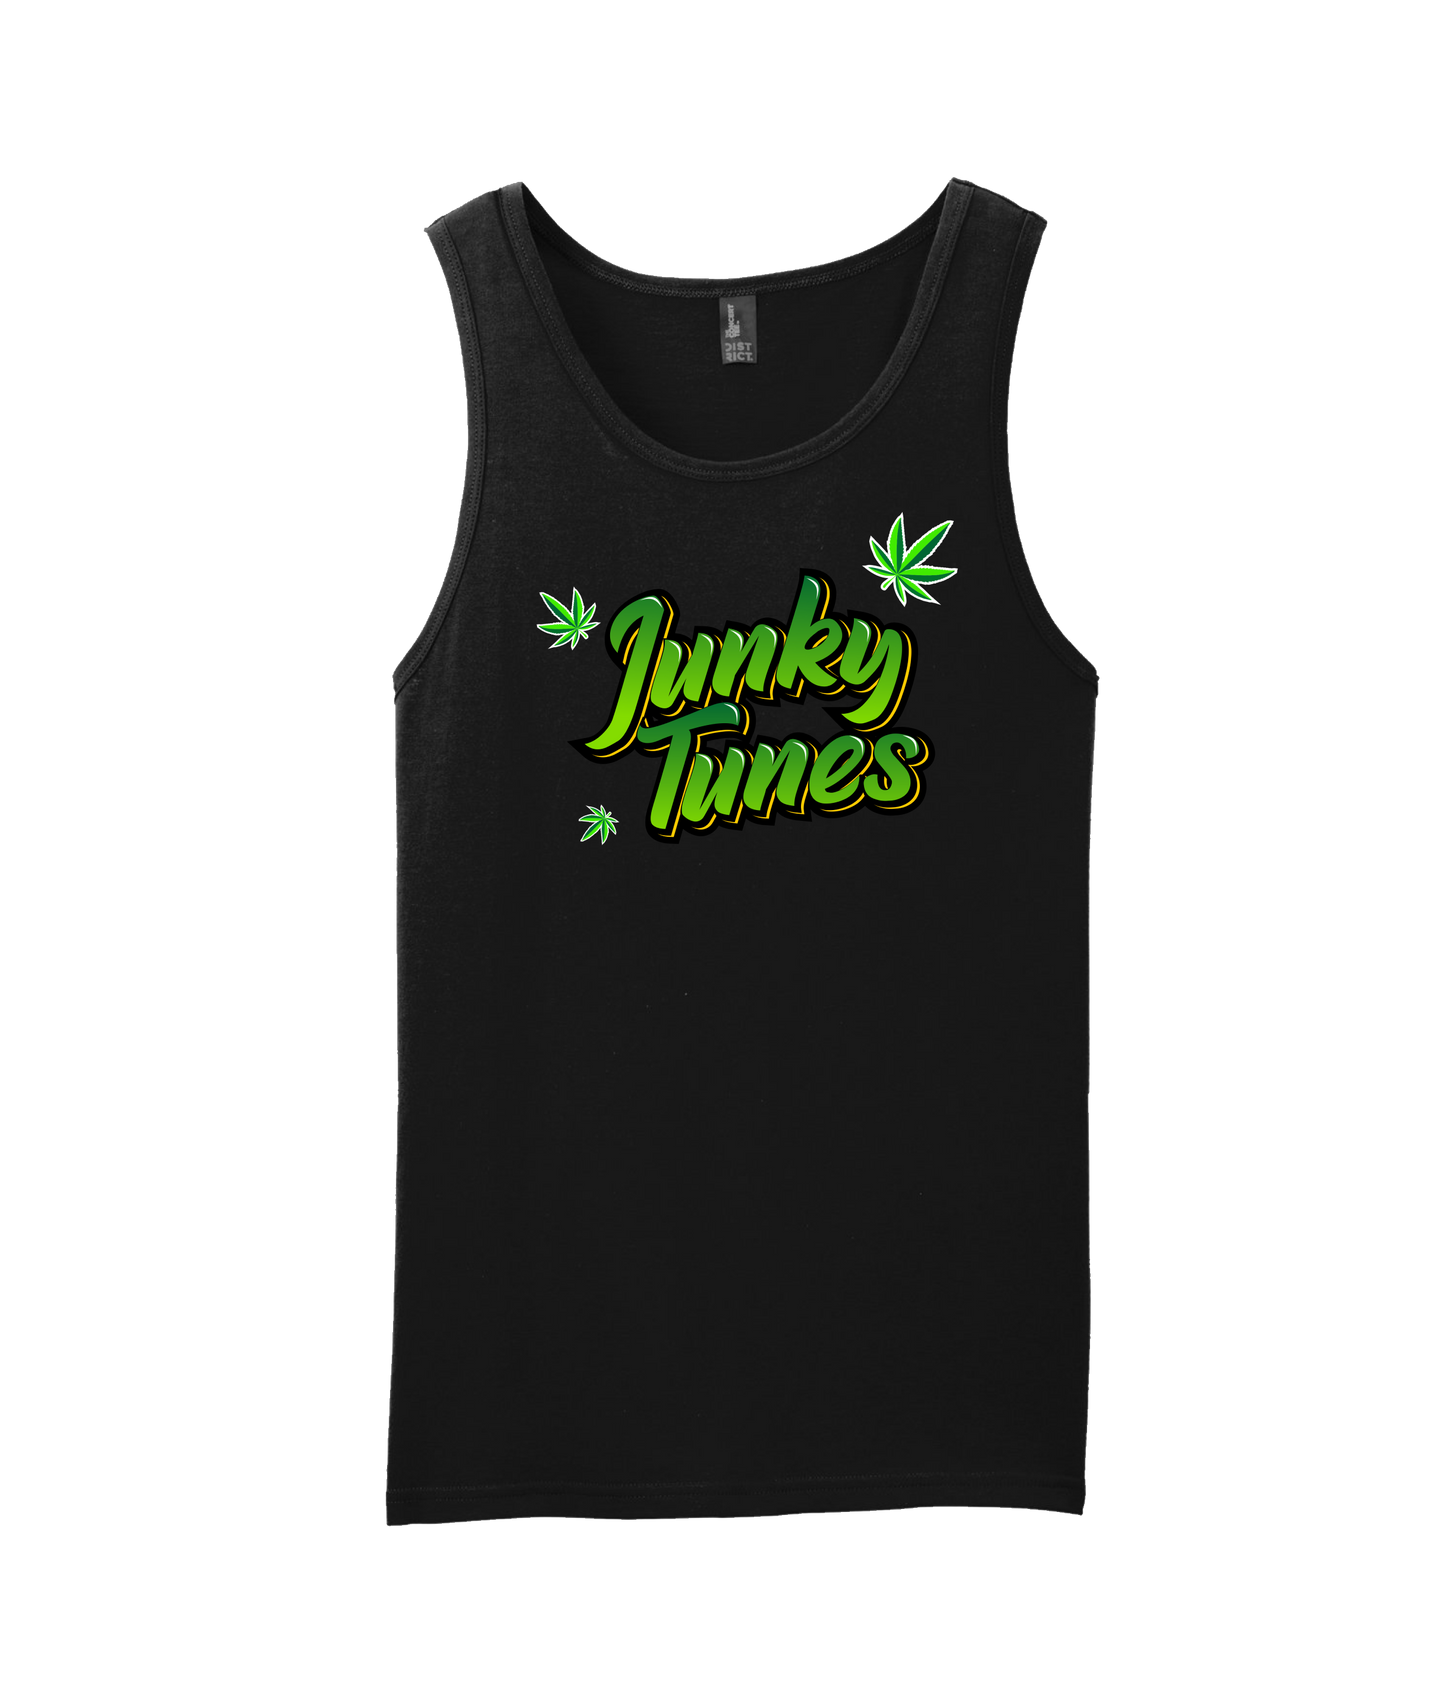 JunkyTunes - Logo Green - Black Tank Top